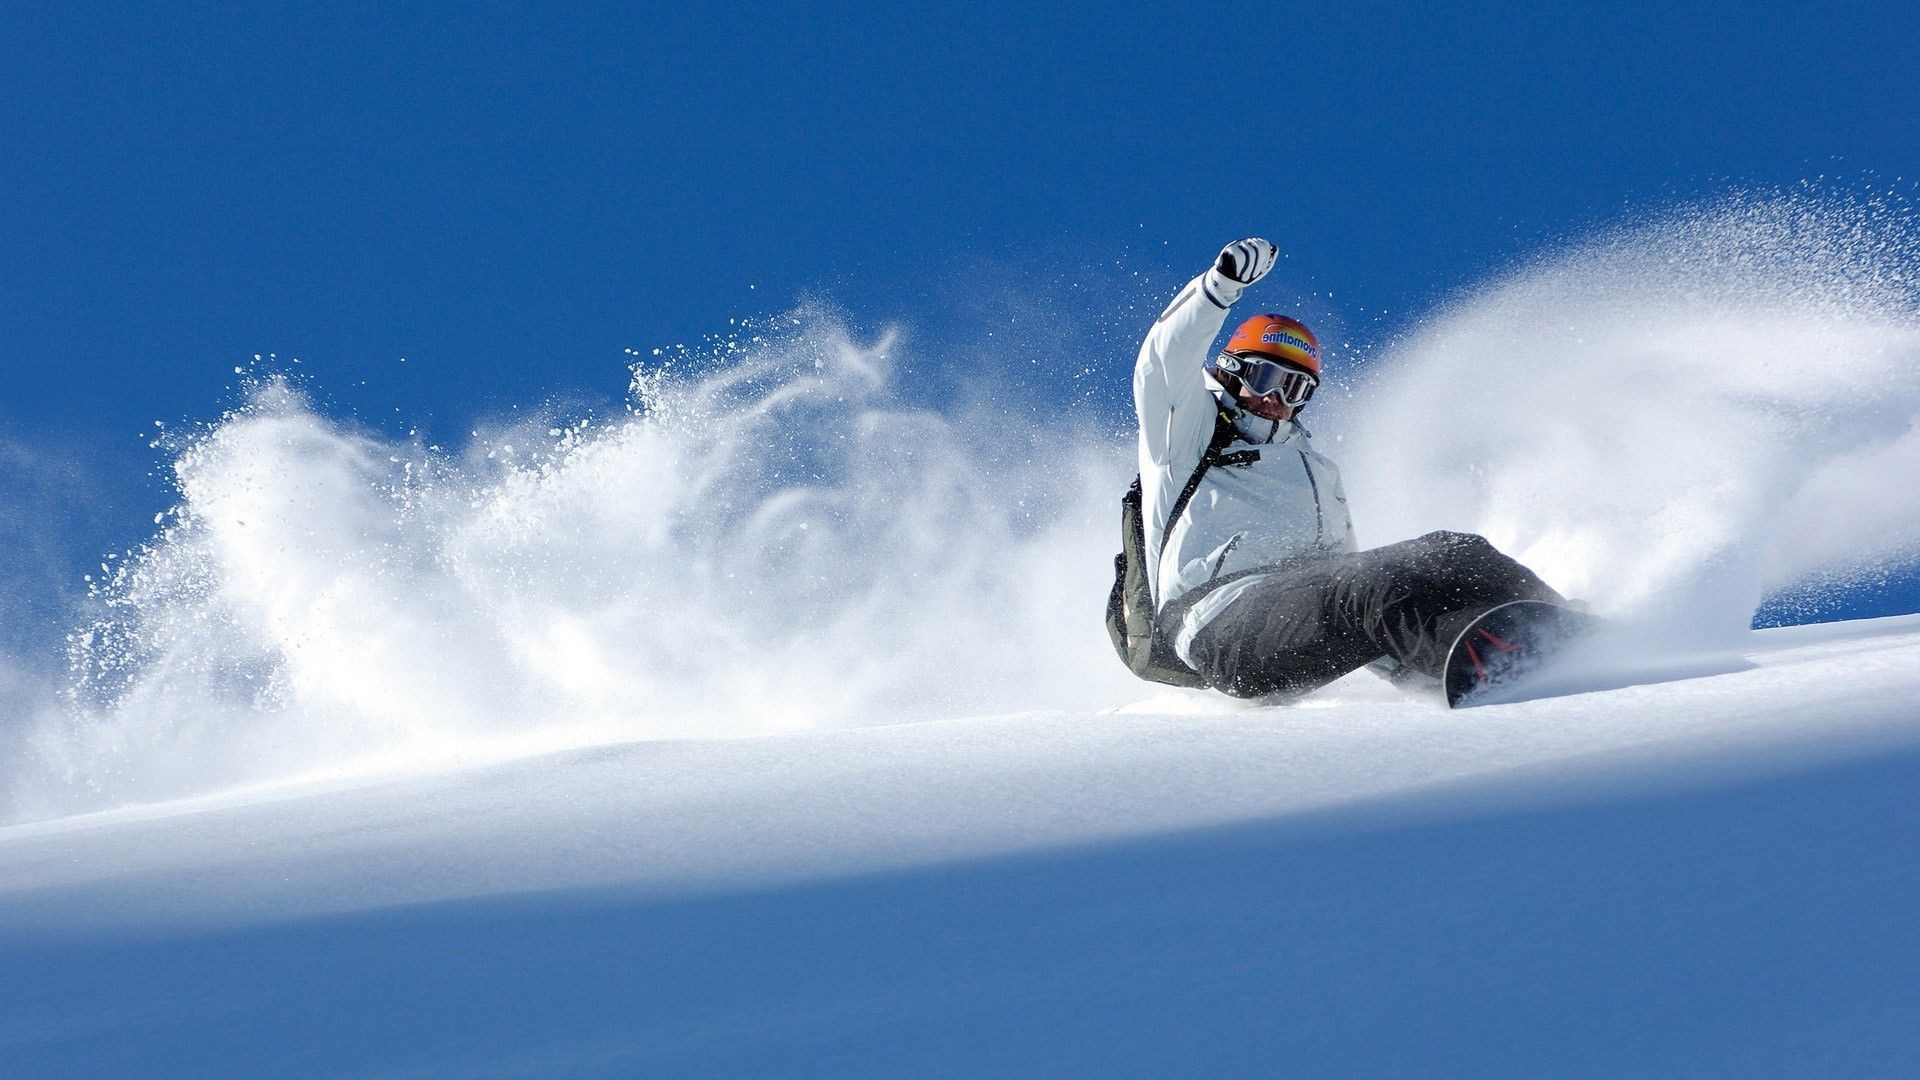 Snowboarding desktop backgrounds pictures